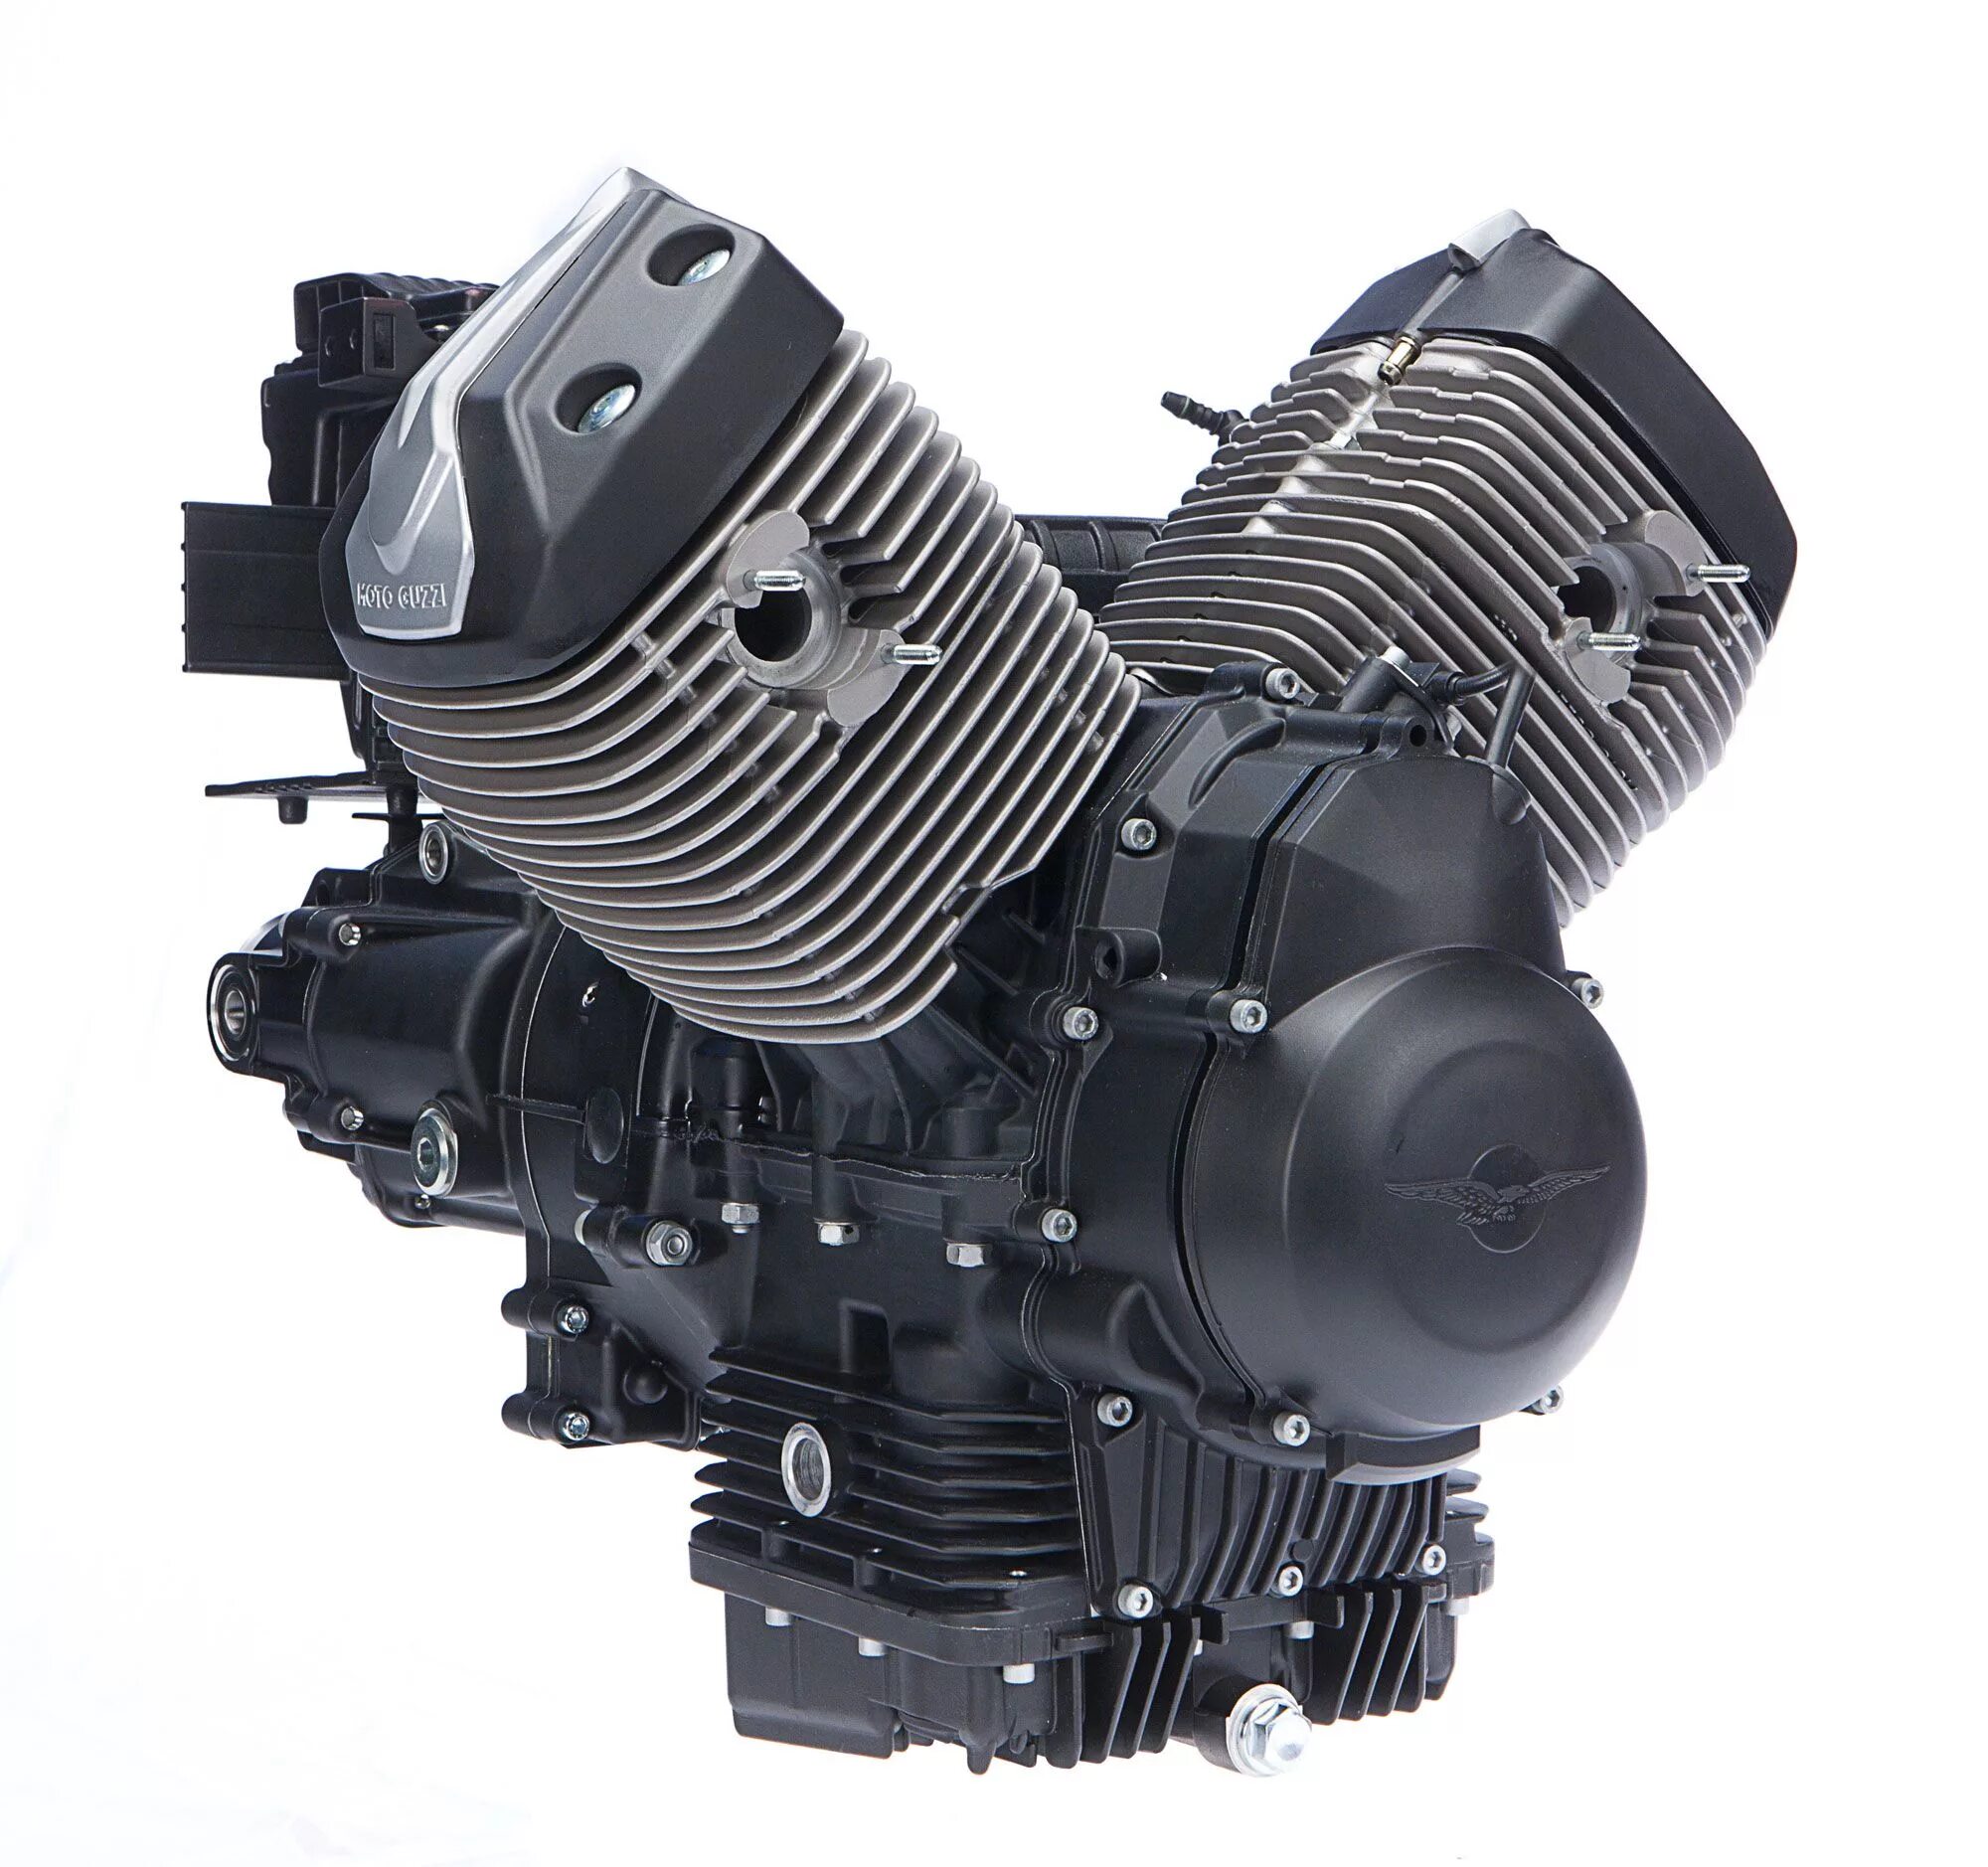 Купить мотор на мотоцикл. Moto Guzzi 750 двигатель. Moto Guzzi двигатель. Мотодвигатель v4. Moto Guzzi трехцилиндровый.